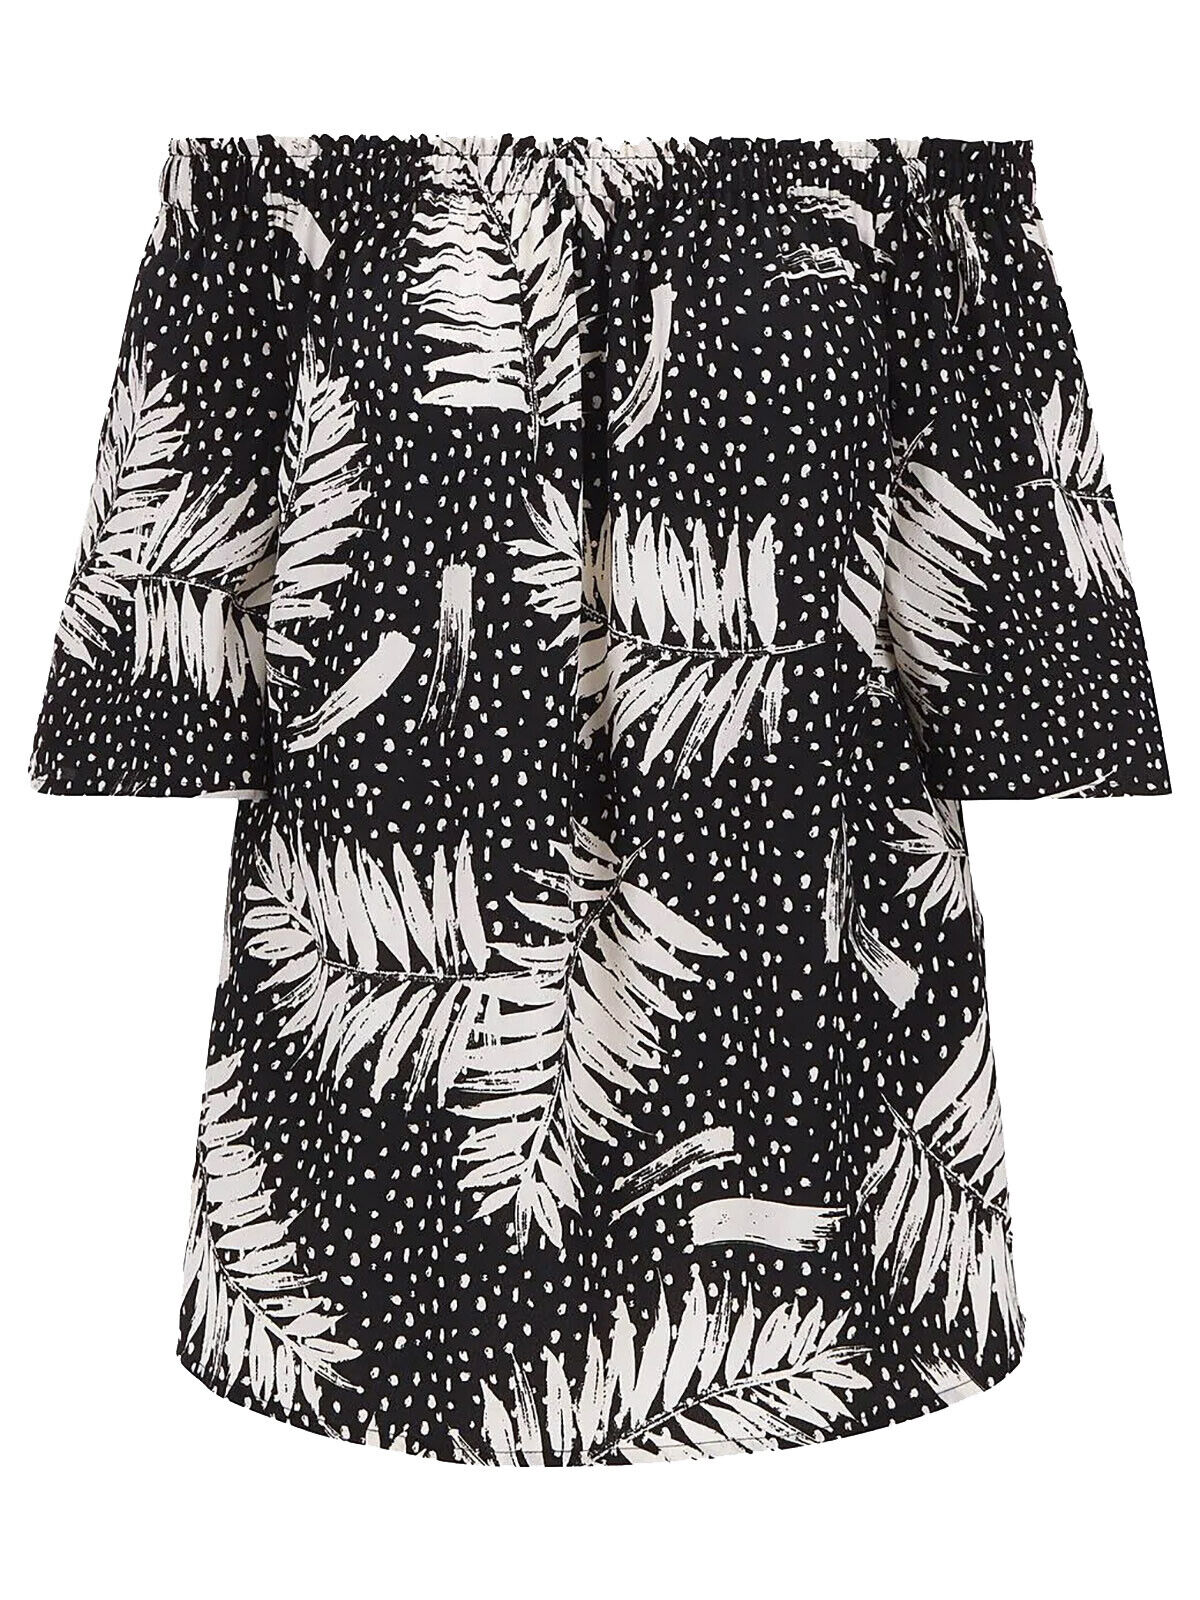 Capsule Black Palm &amp; Spot Print 3/4 Sleeve Bardot Top Sizes 12 14 16 20 22 24 26